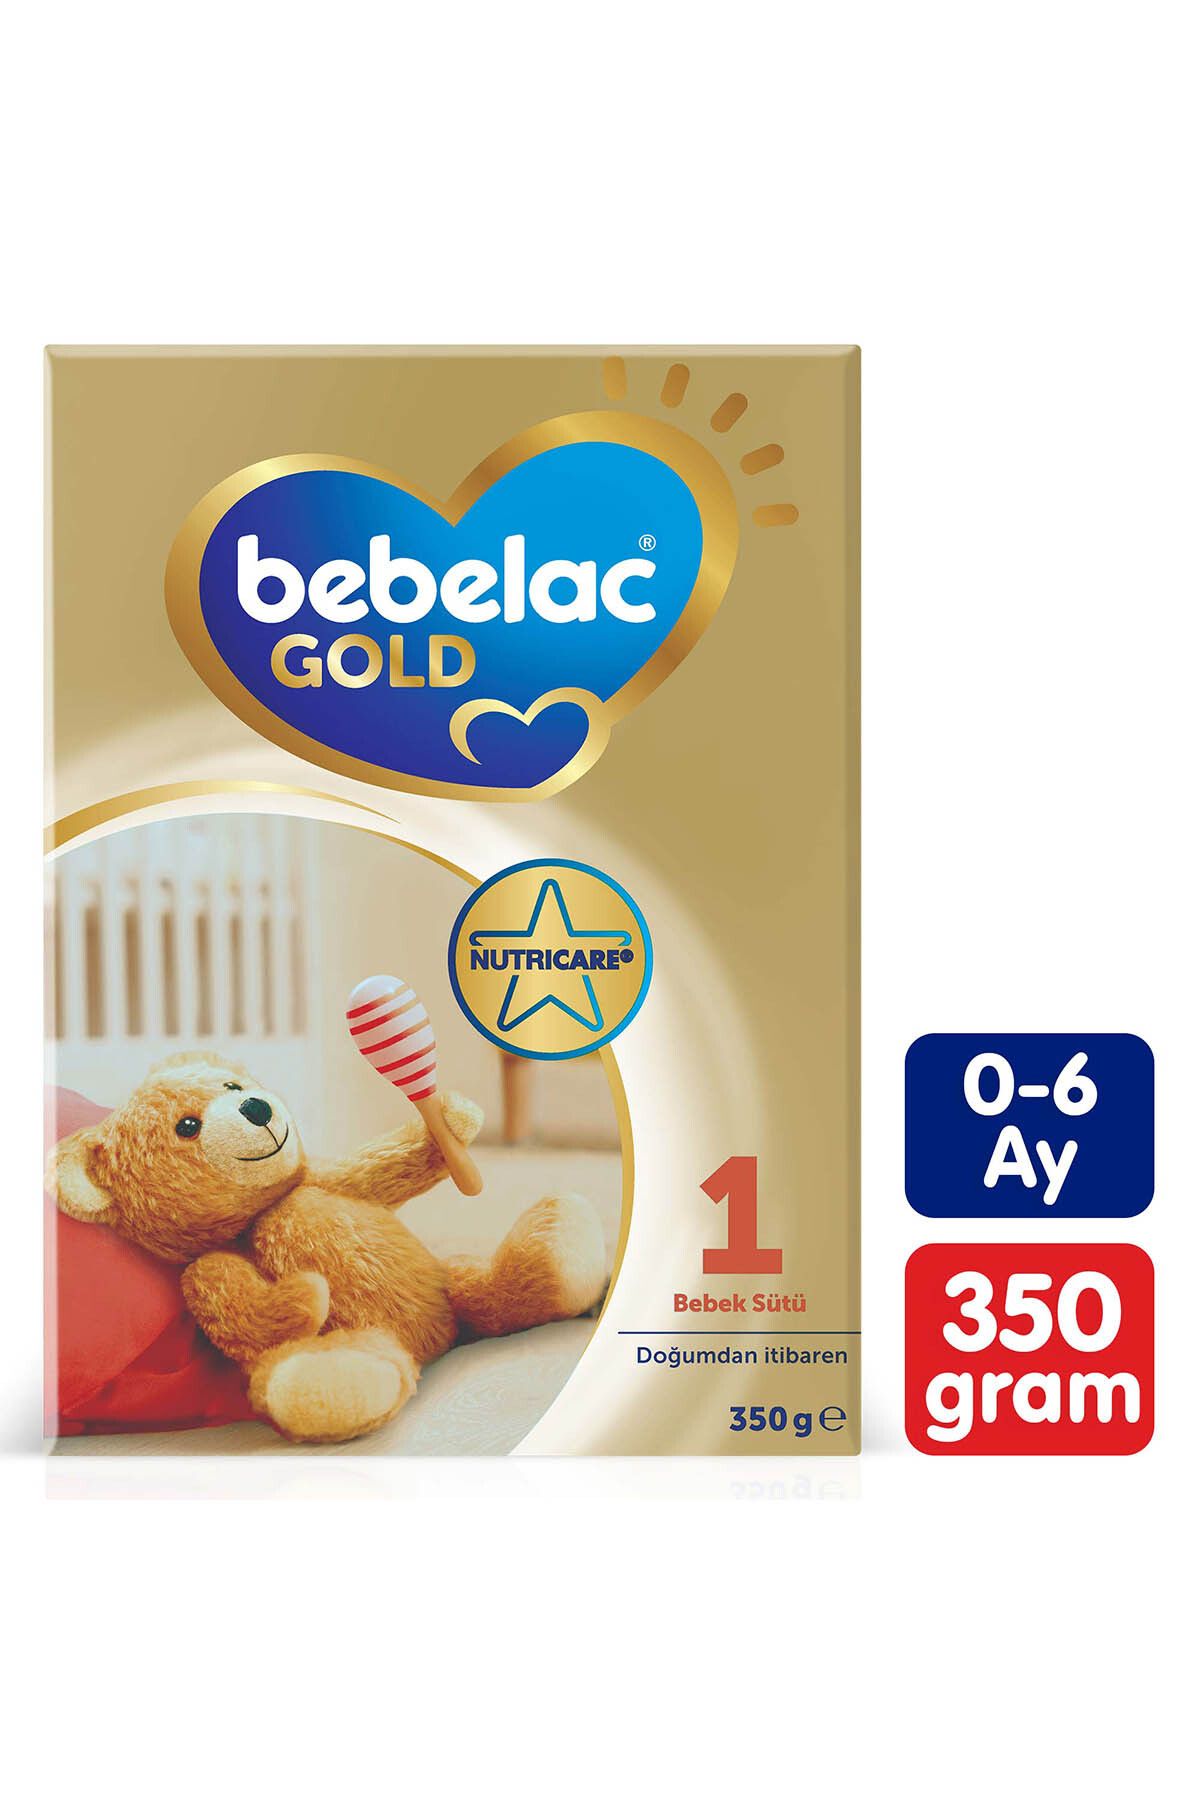 Bebelac Gold 1 Bebek Sütü 350 g 0-6 Ay